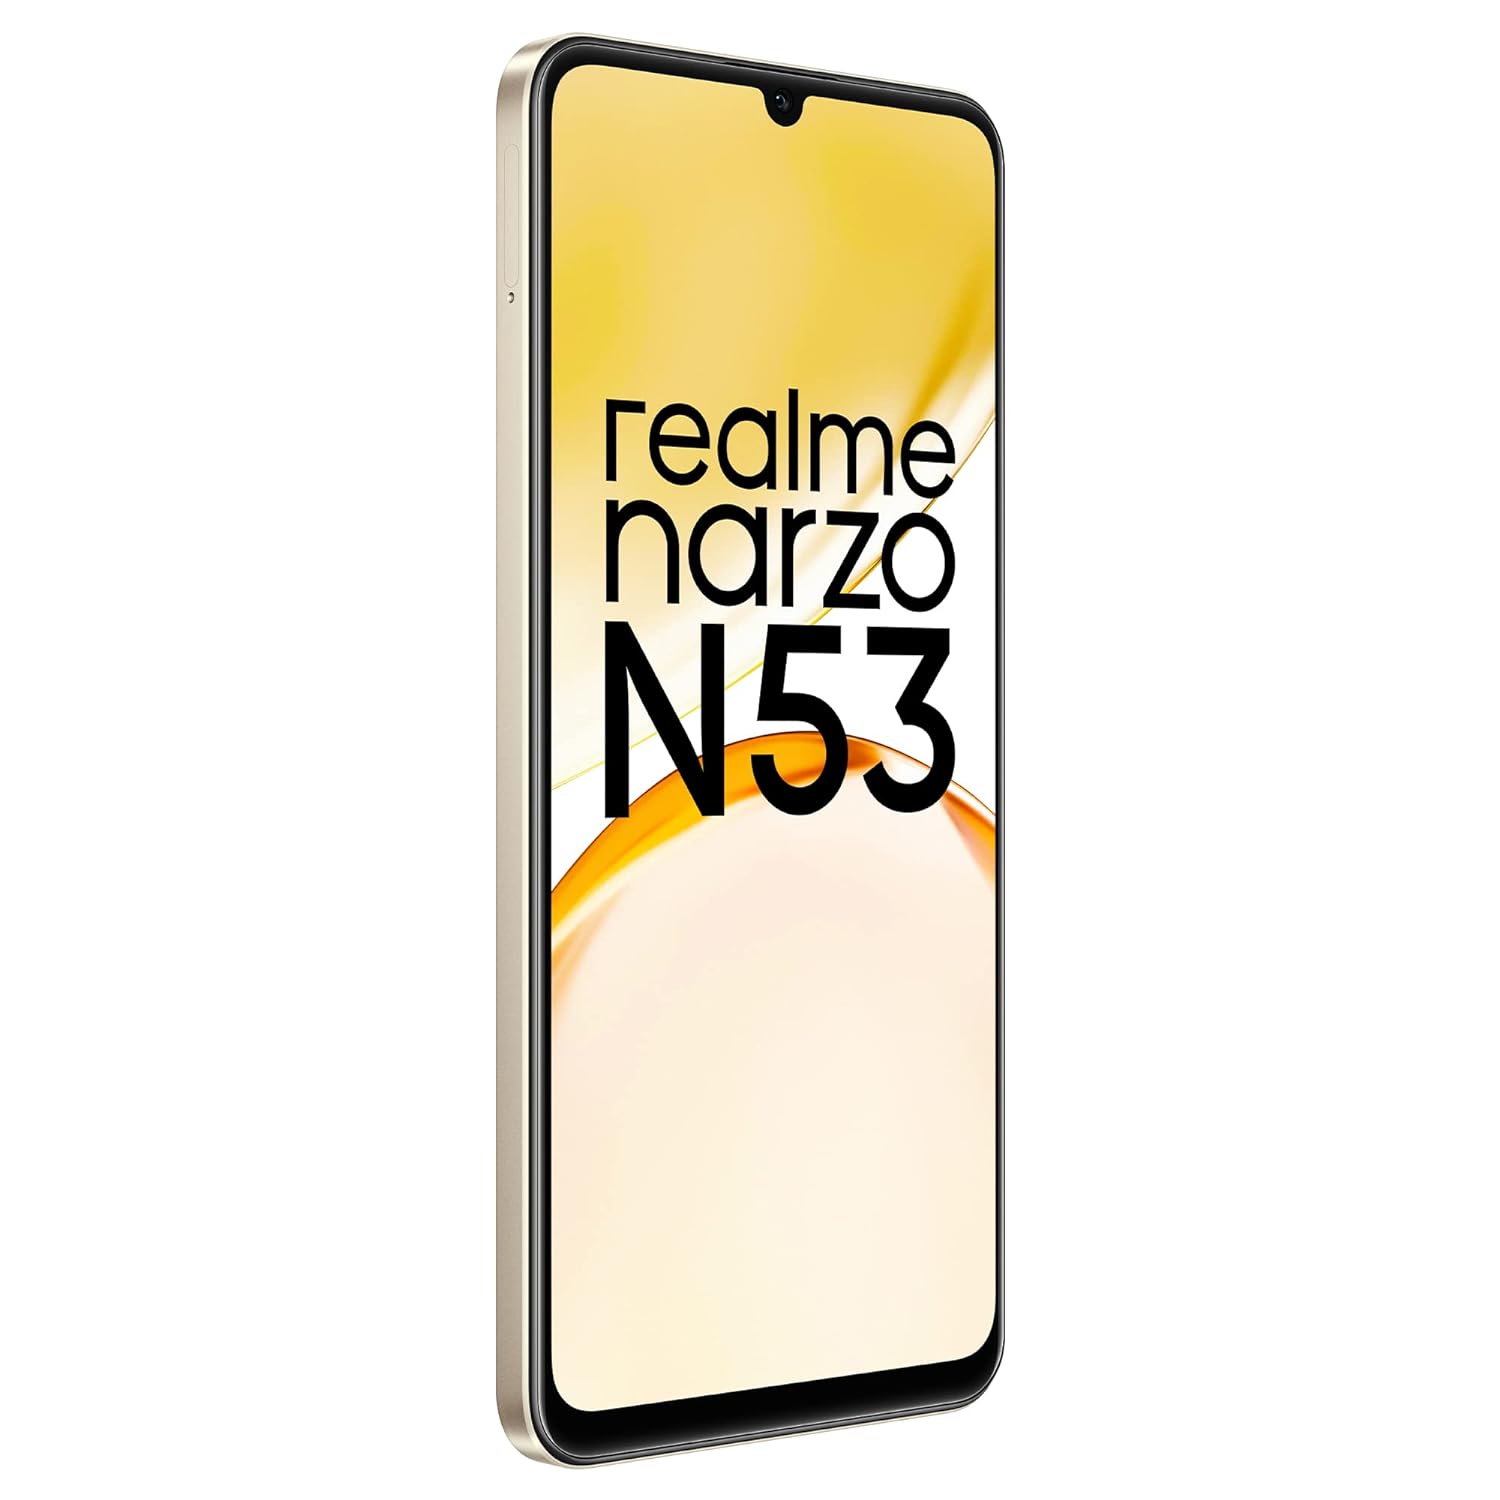 realme narzo N53 (Feather Gold, 64GB) (4GB)